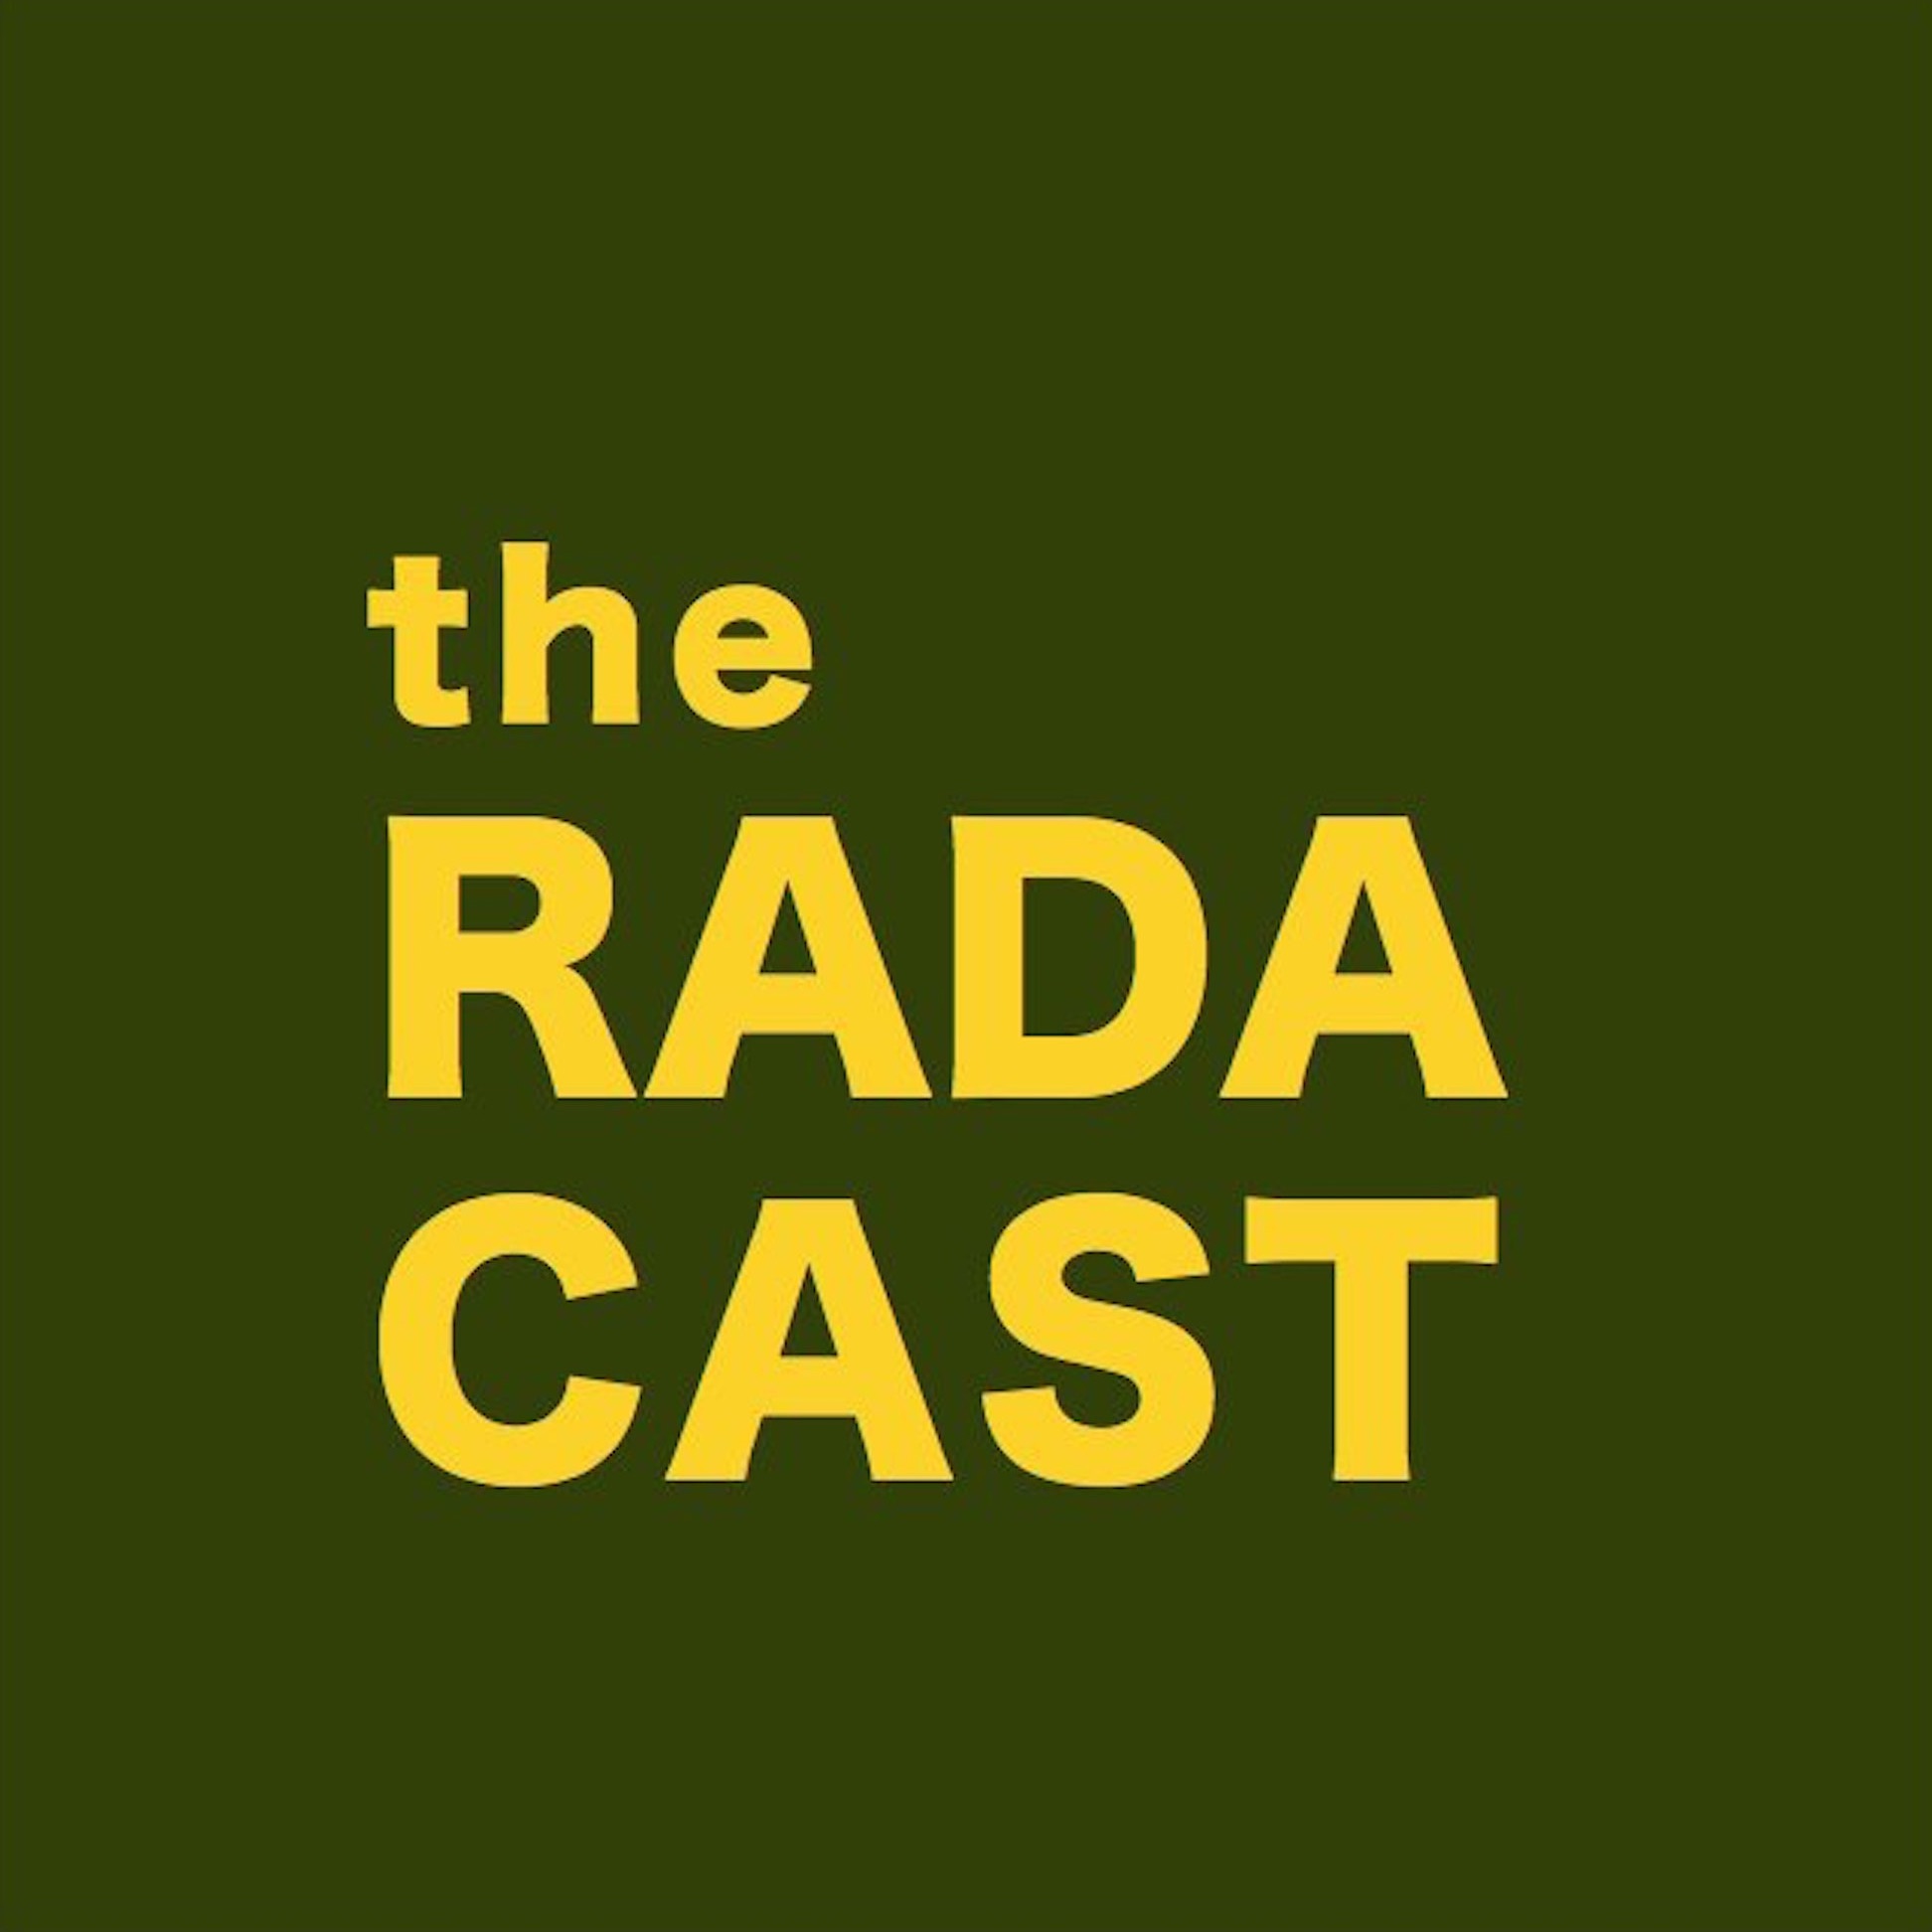 The Radacast